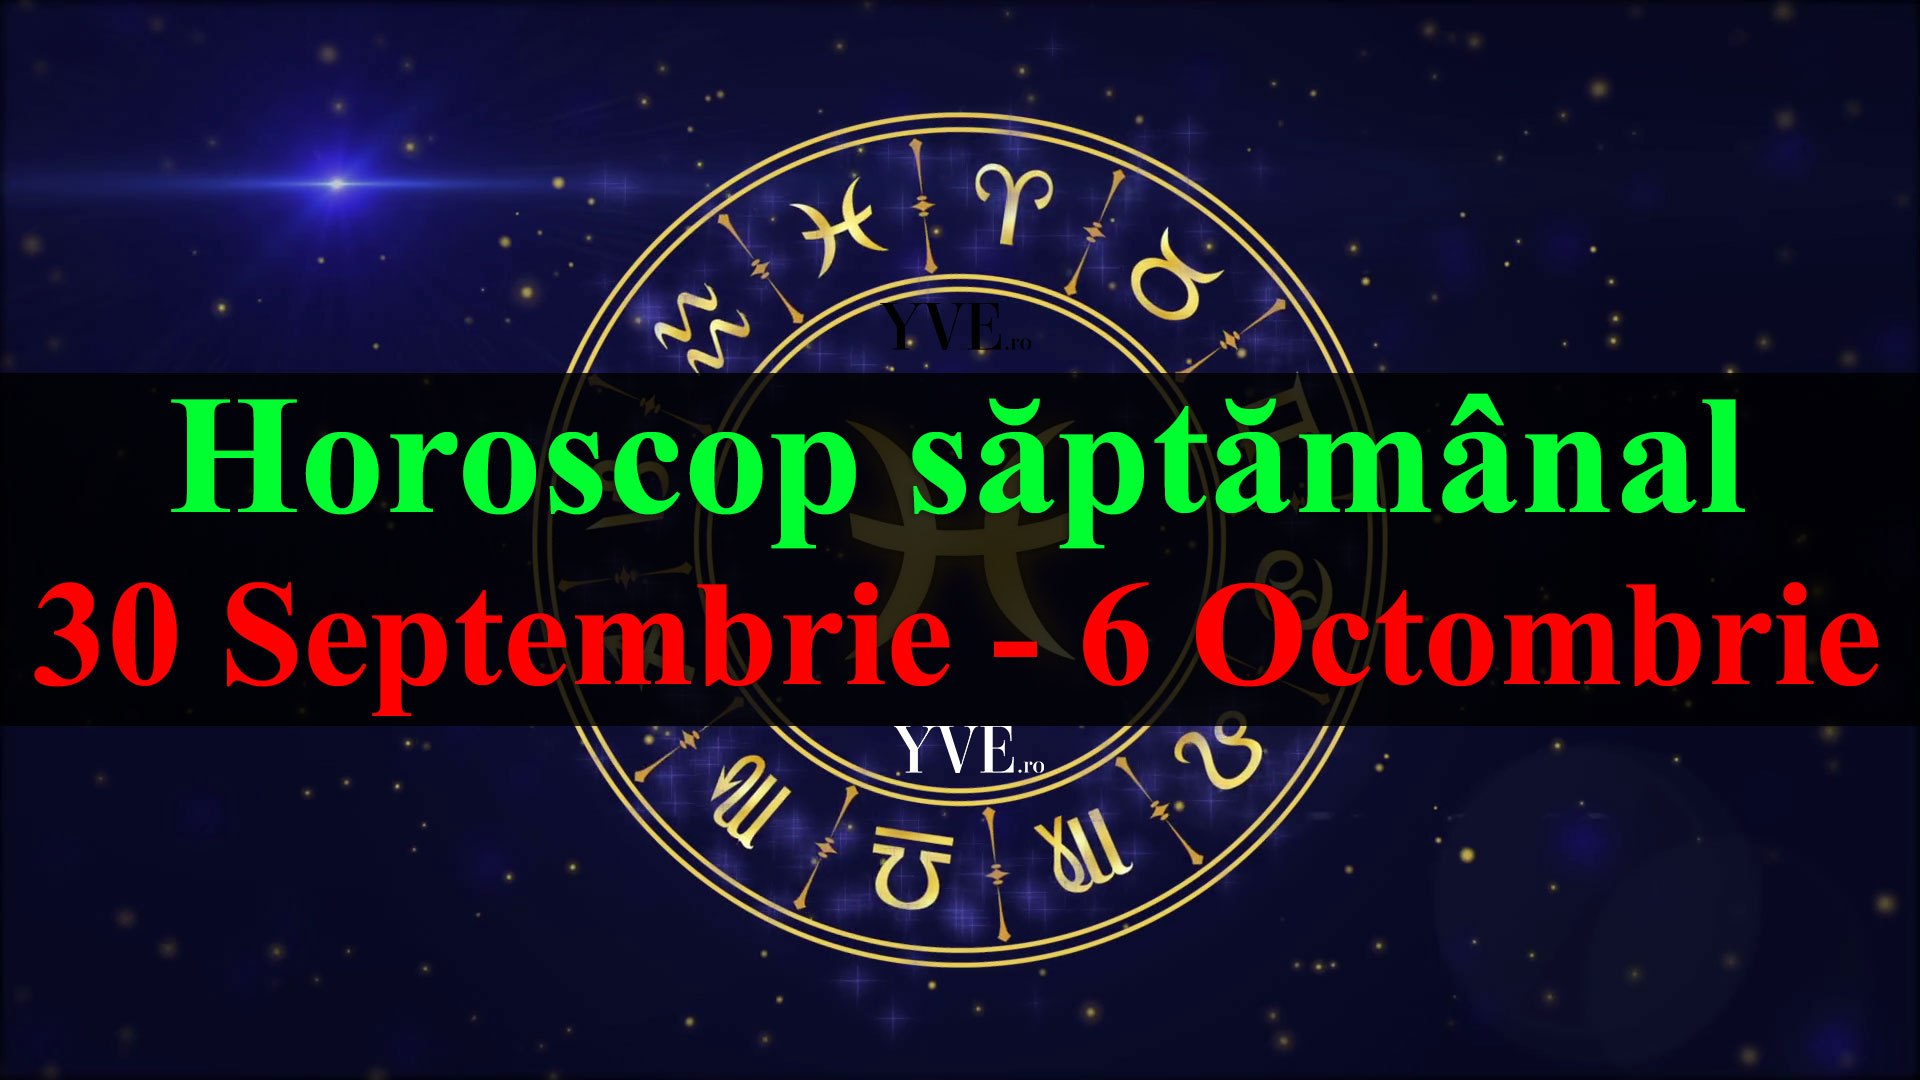 Horoscop saptamanal 30 Septembrie - 6 Octombrie 2019